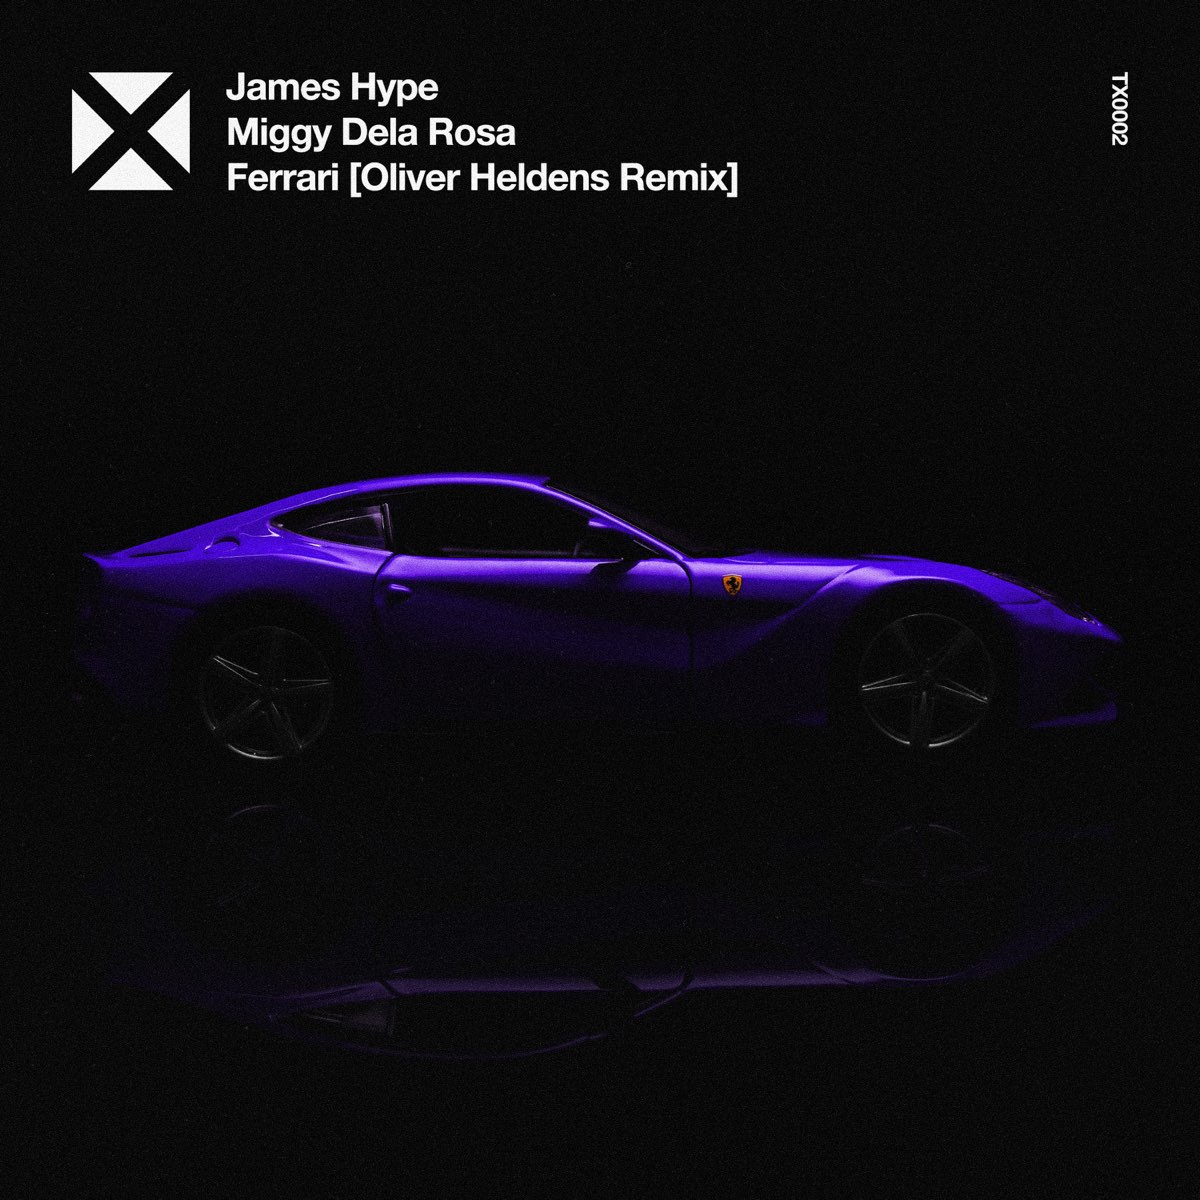 James Hype Ferrari Heldens Extended Remix. James Hype feat. Miggy dela Rosa - Ferrari. Ferrari James Hype Maggi Delarosa. James Hype, Miggy dela Rosa Ferrari (DJ Dark & mentol Remix). Ferrari hype